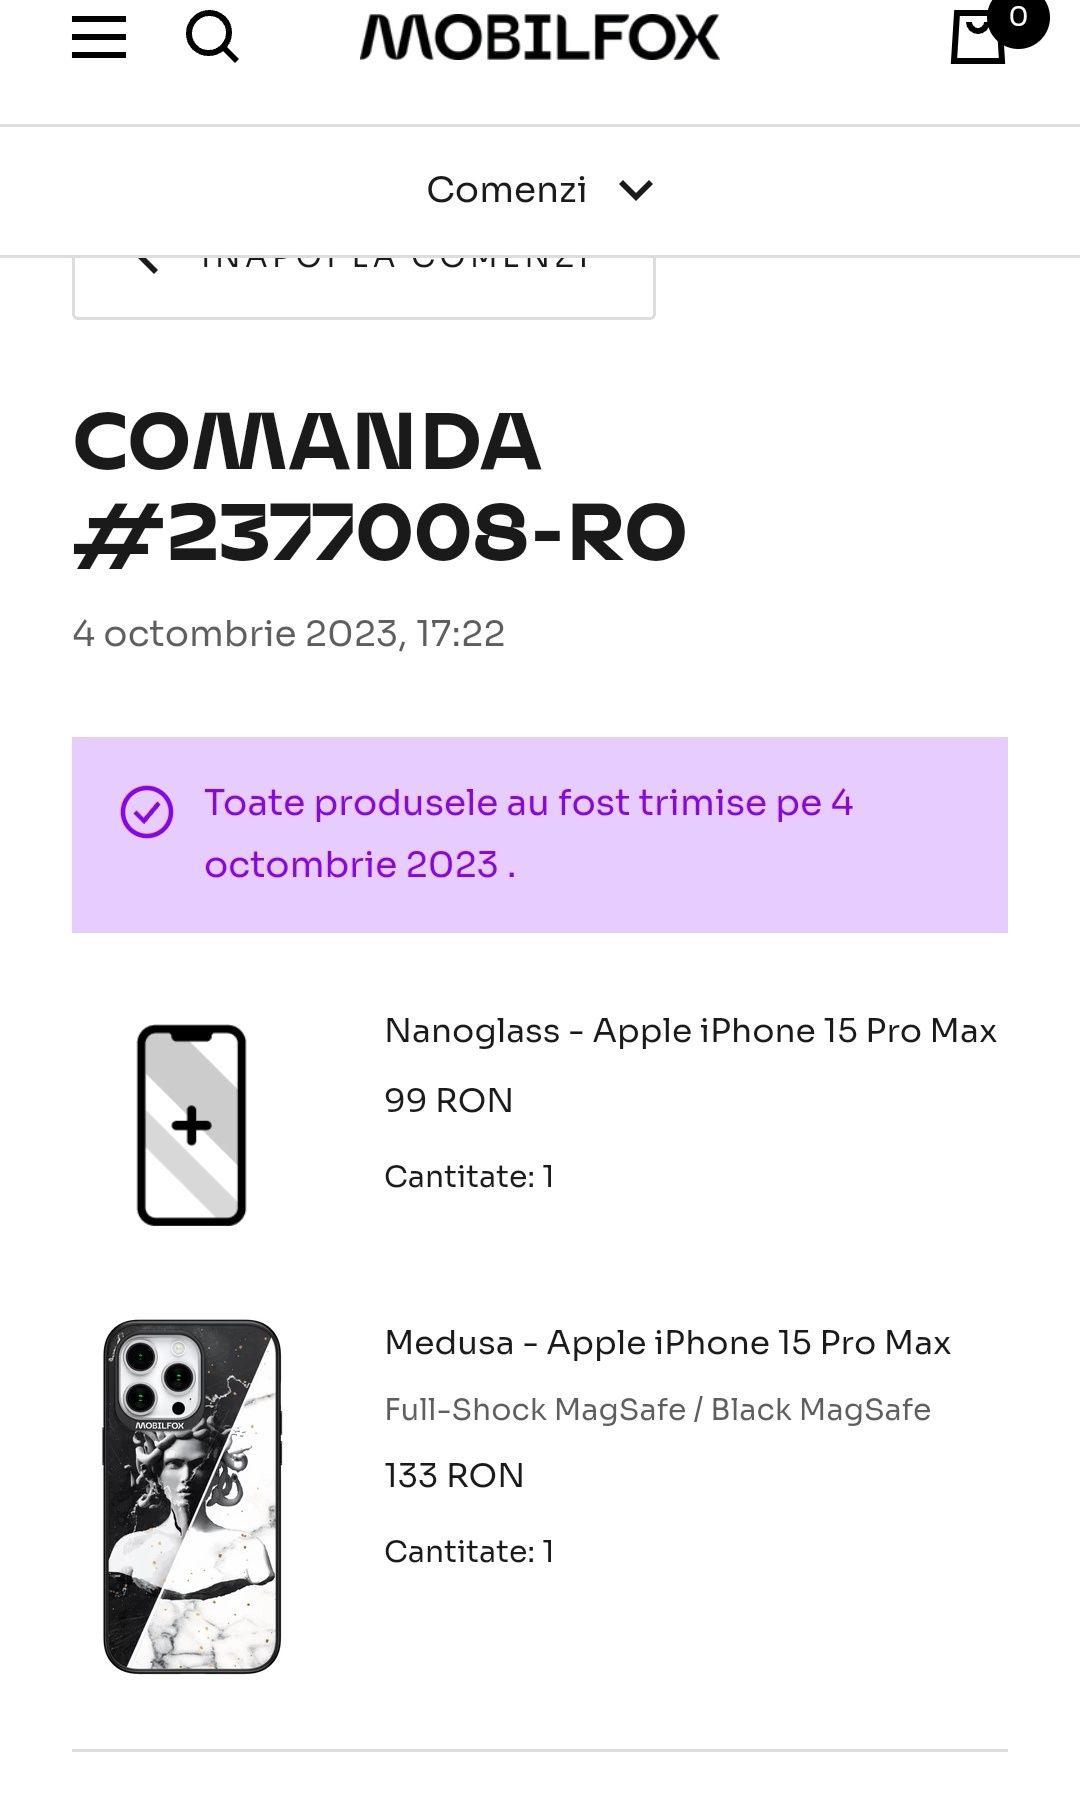 IPhone 15 pro max husă + Folie mobilfox Medusa